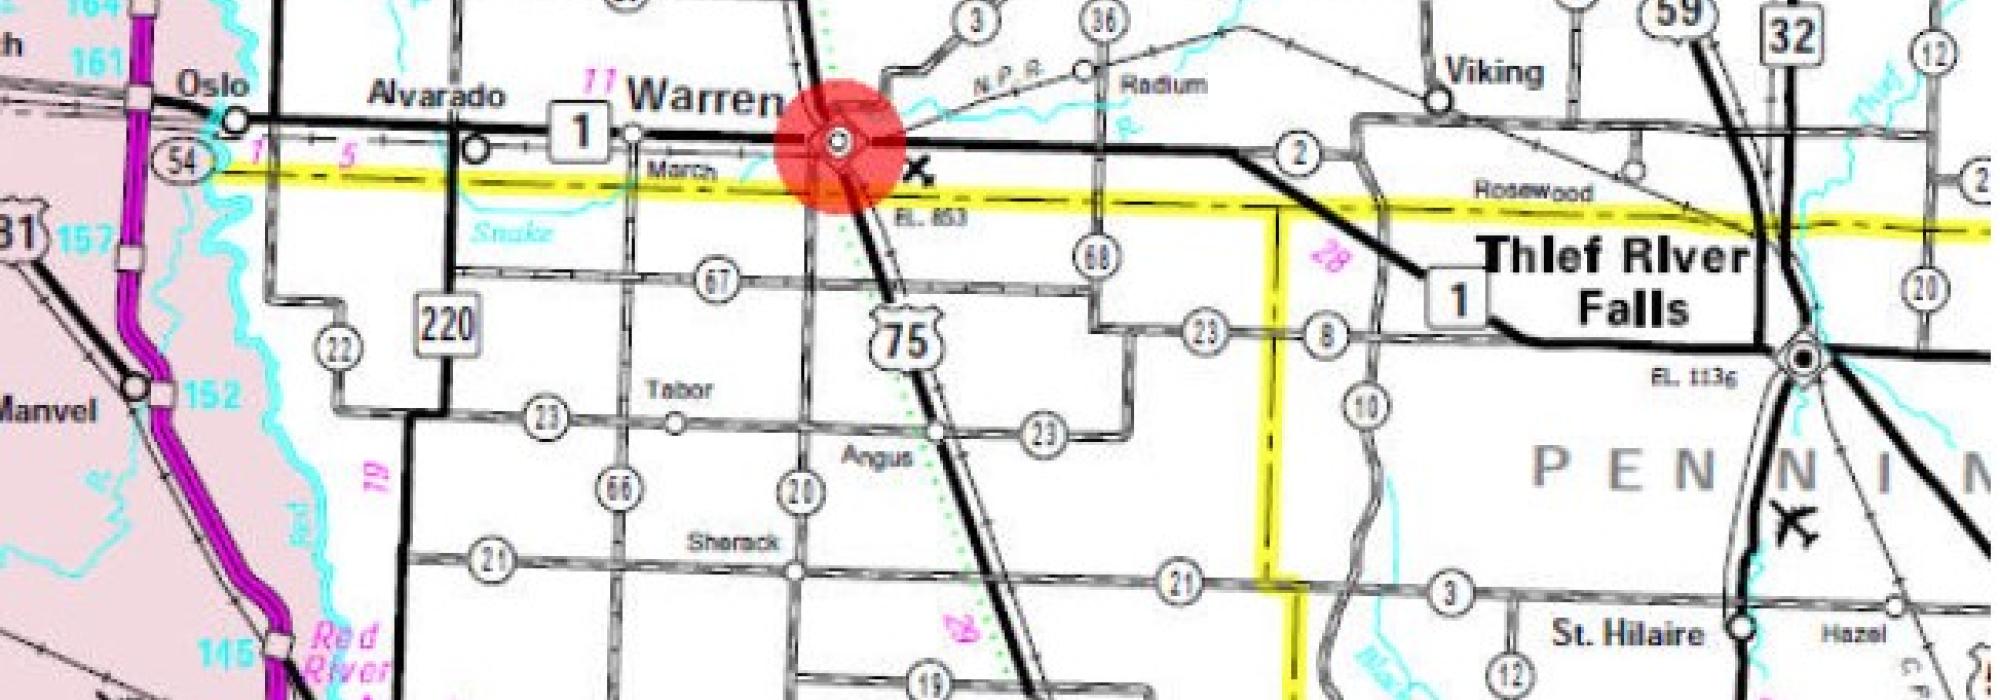 Warren Minnesota on the map